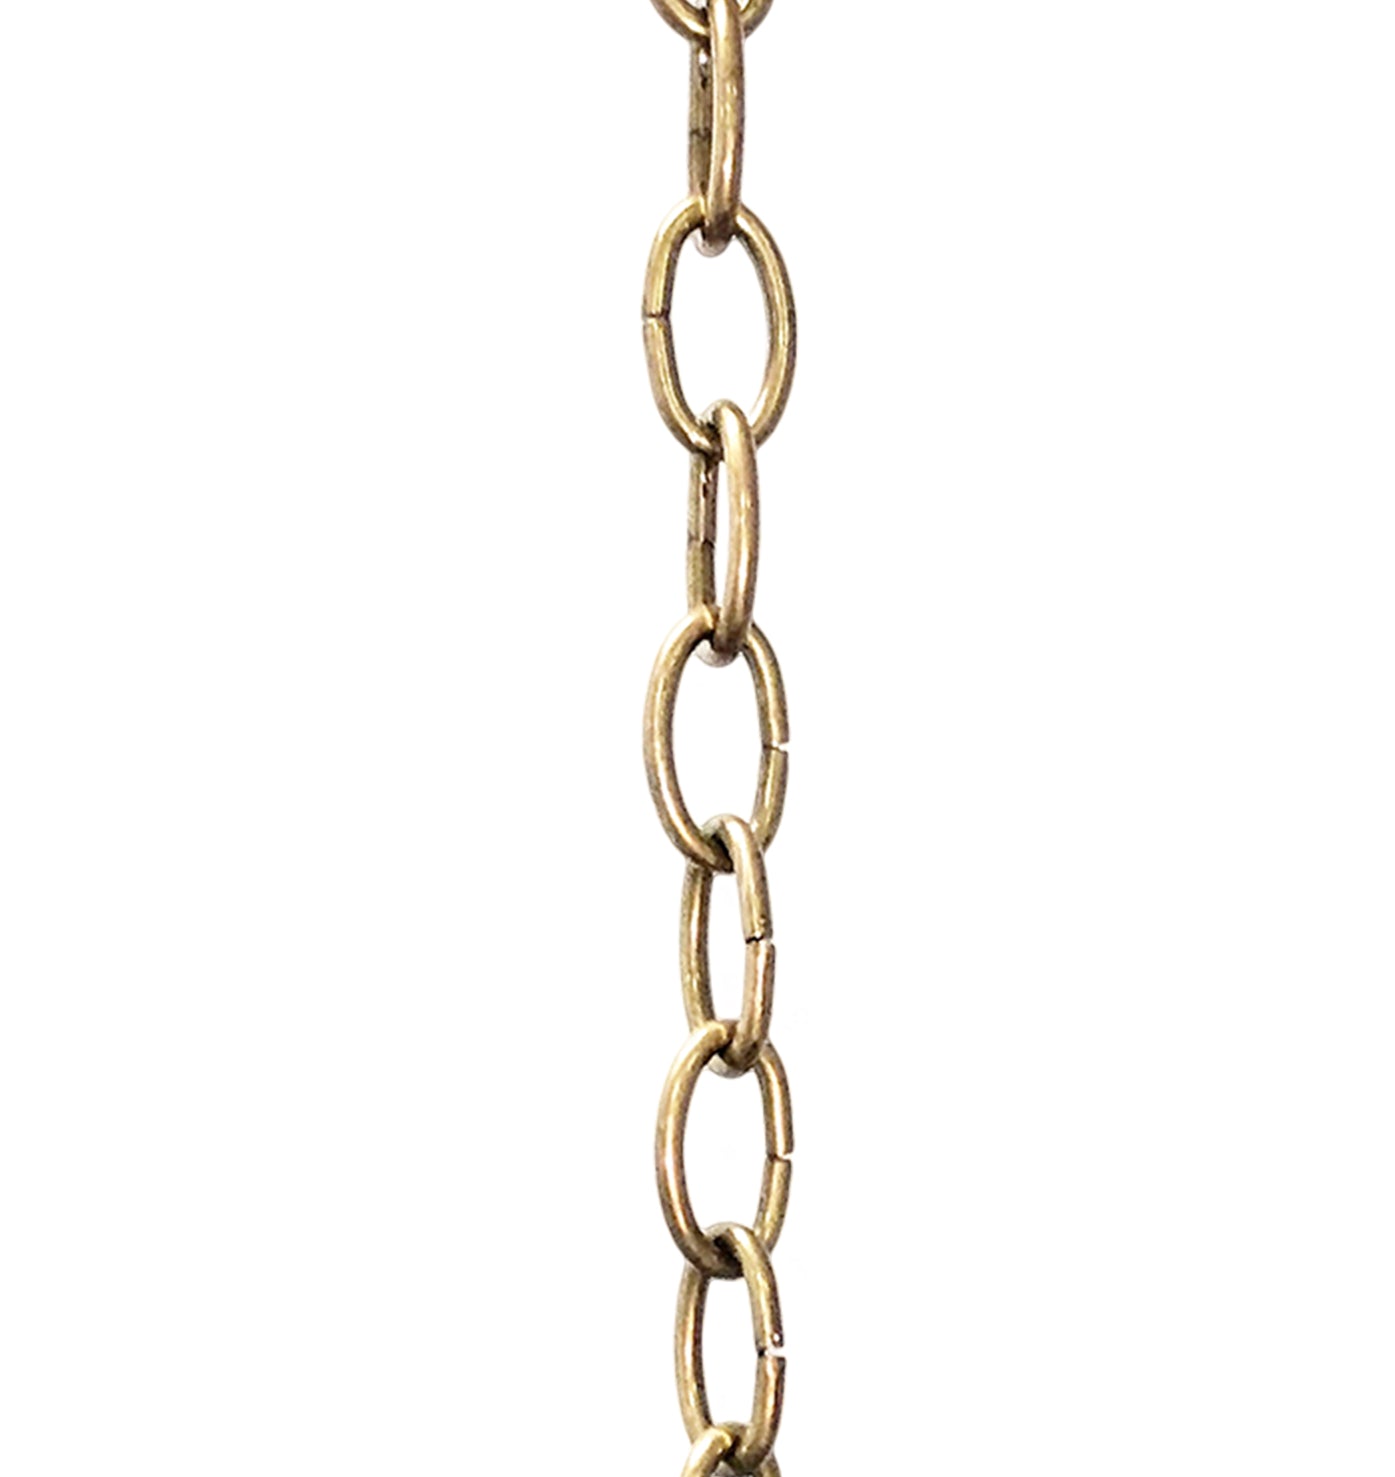 36" Standard Chain Add-On - Brass or Nickel